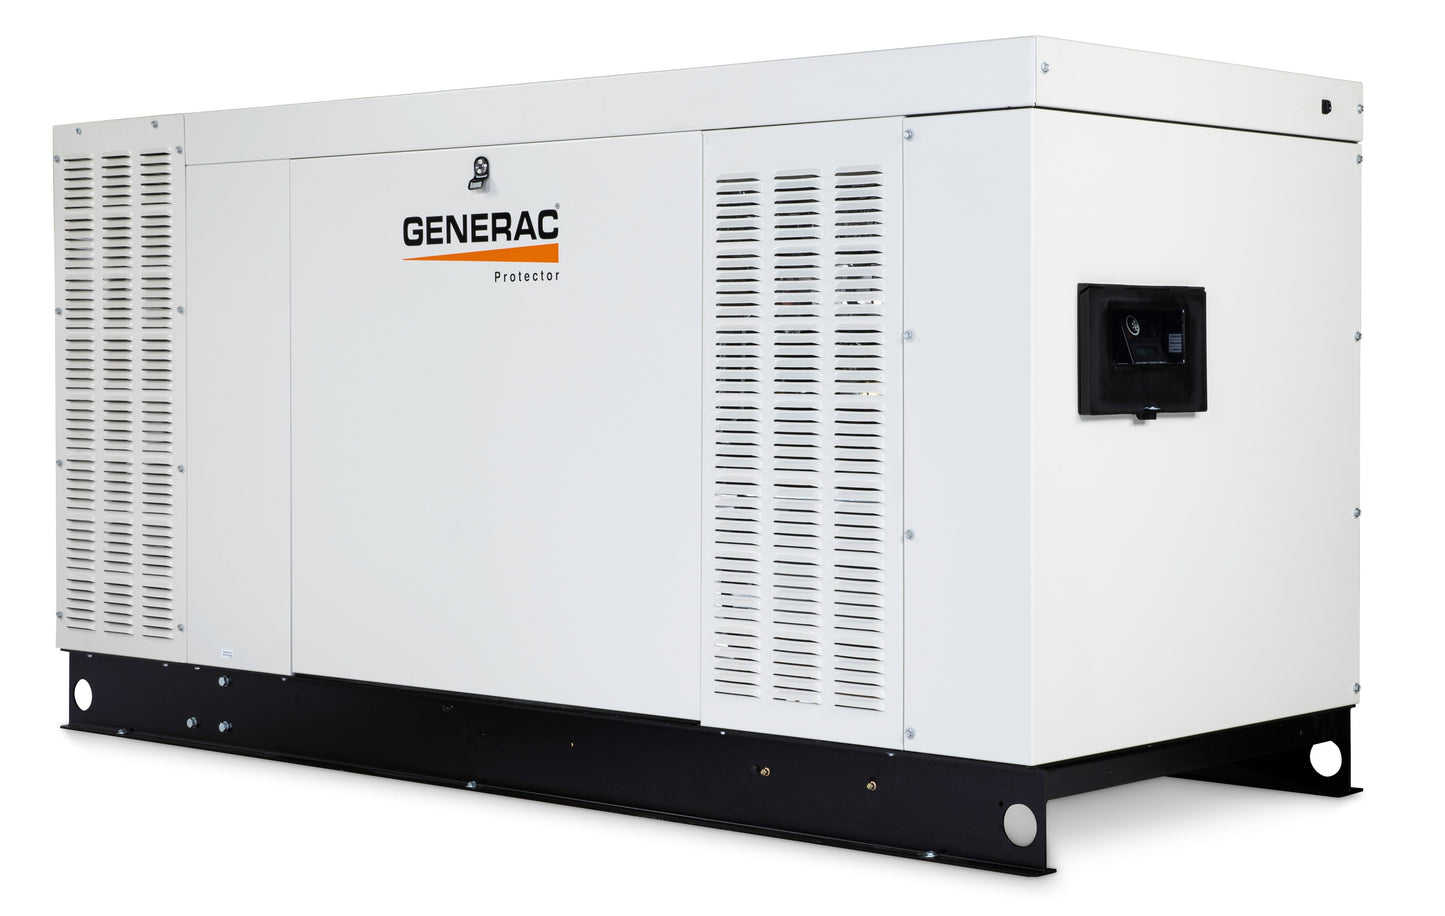 Generac RG06045 Protector 60KW Automatic Standby Liquid-Cooled Gaseous Engine Generator in Aluminum Enclosure